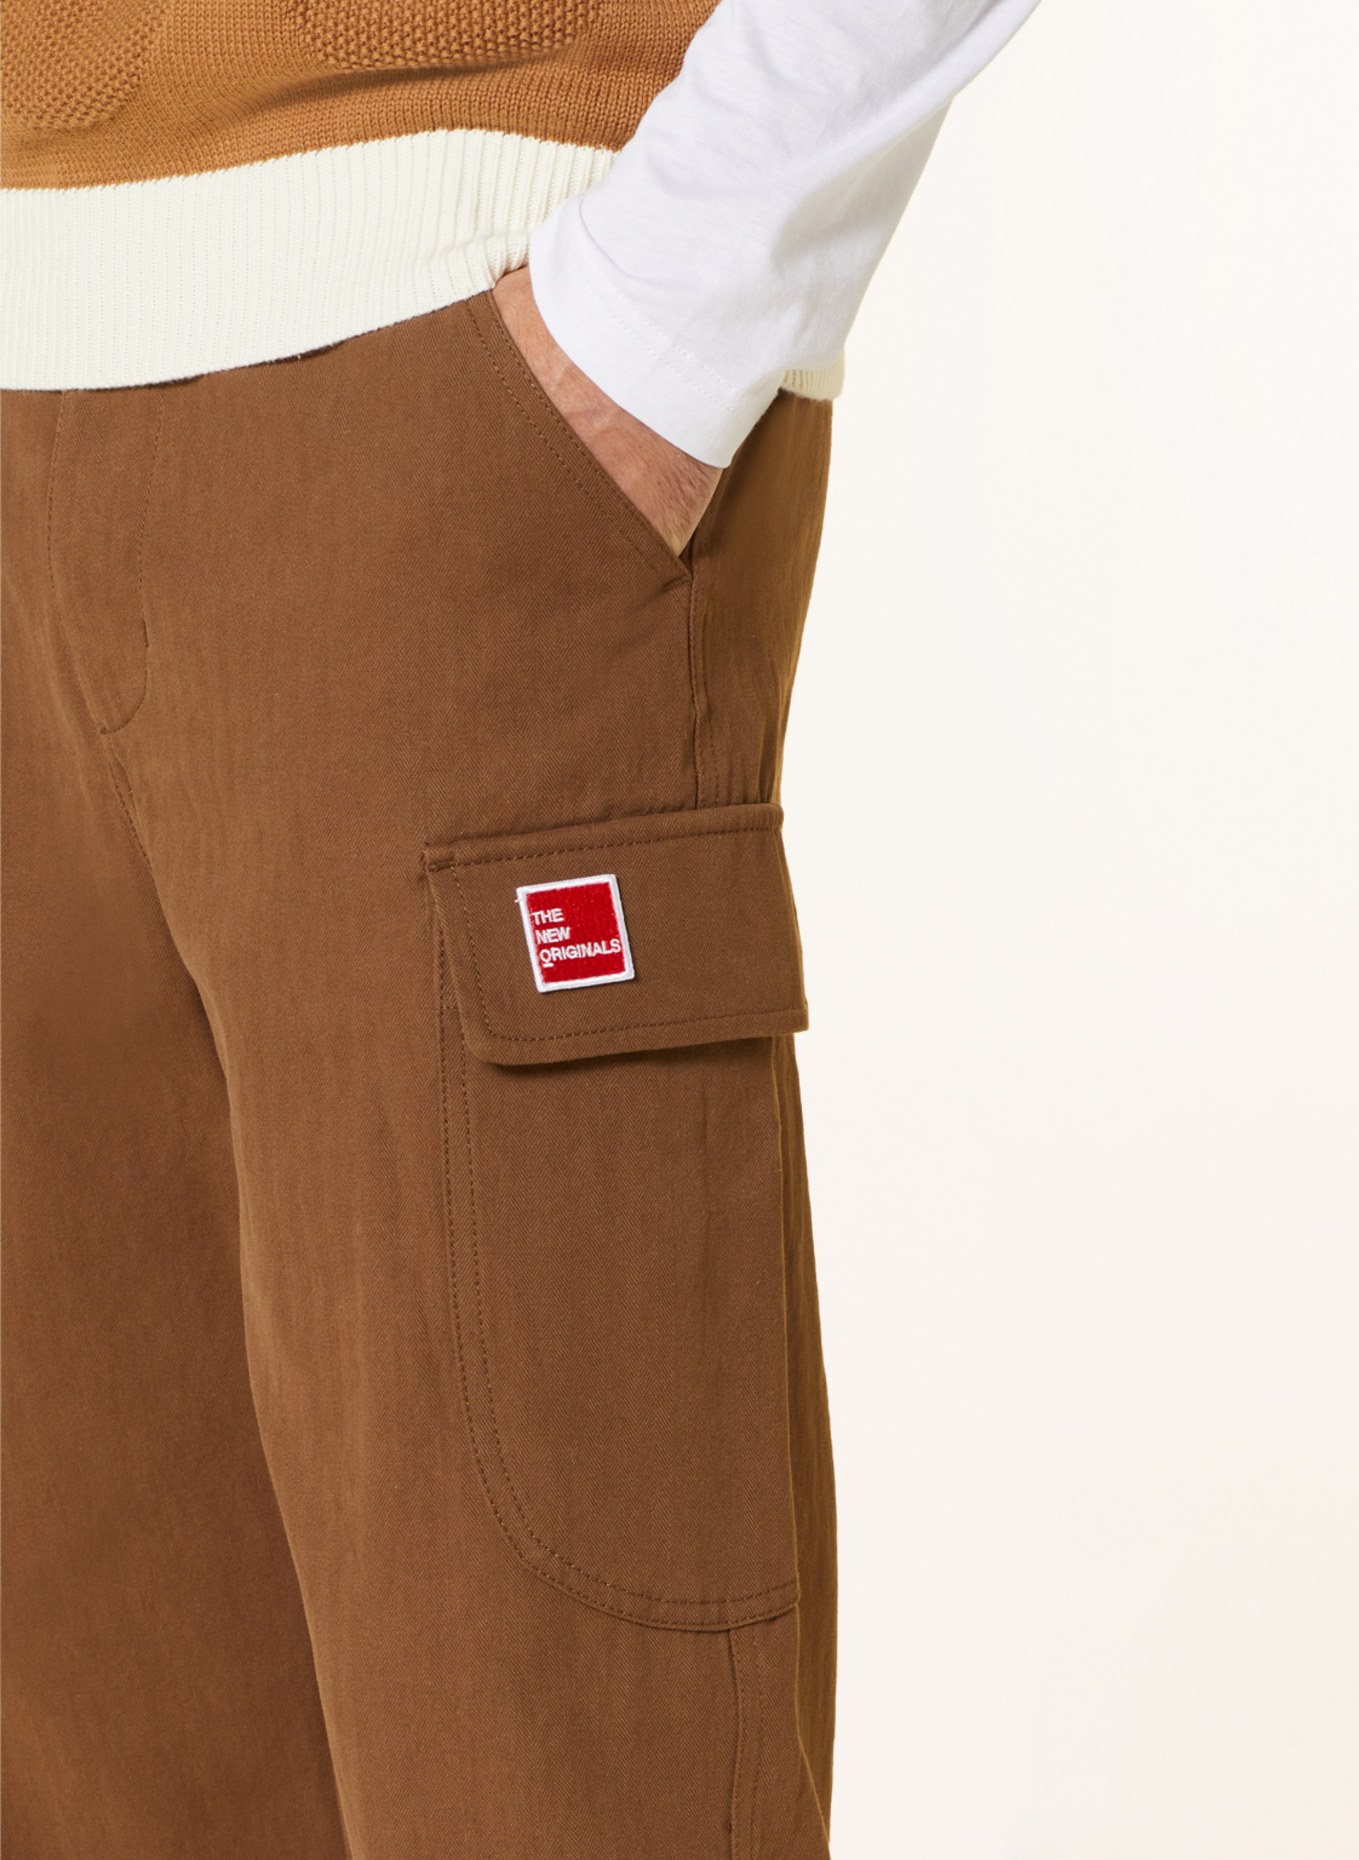 THE NEW ORIGINALS Cargo pants regular fit, Color: BROWN (Image 5)